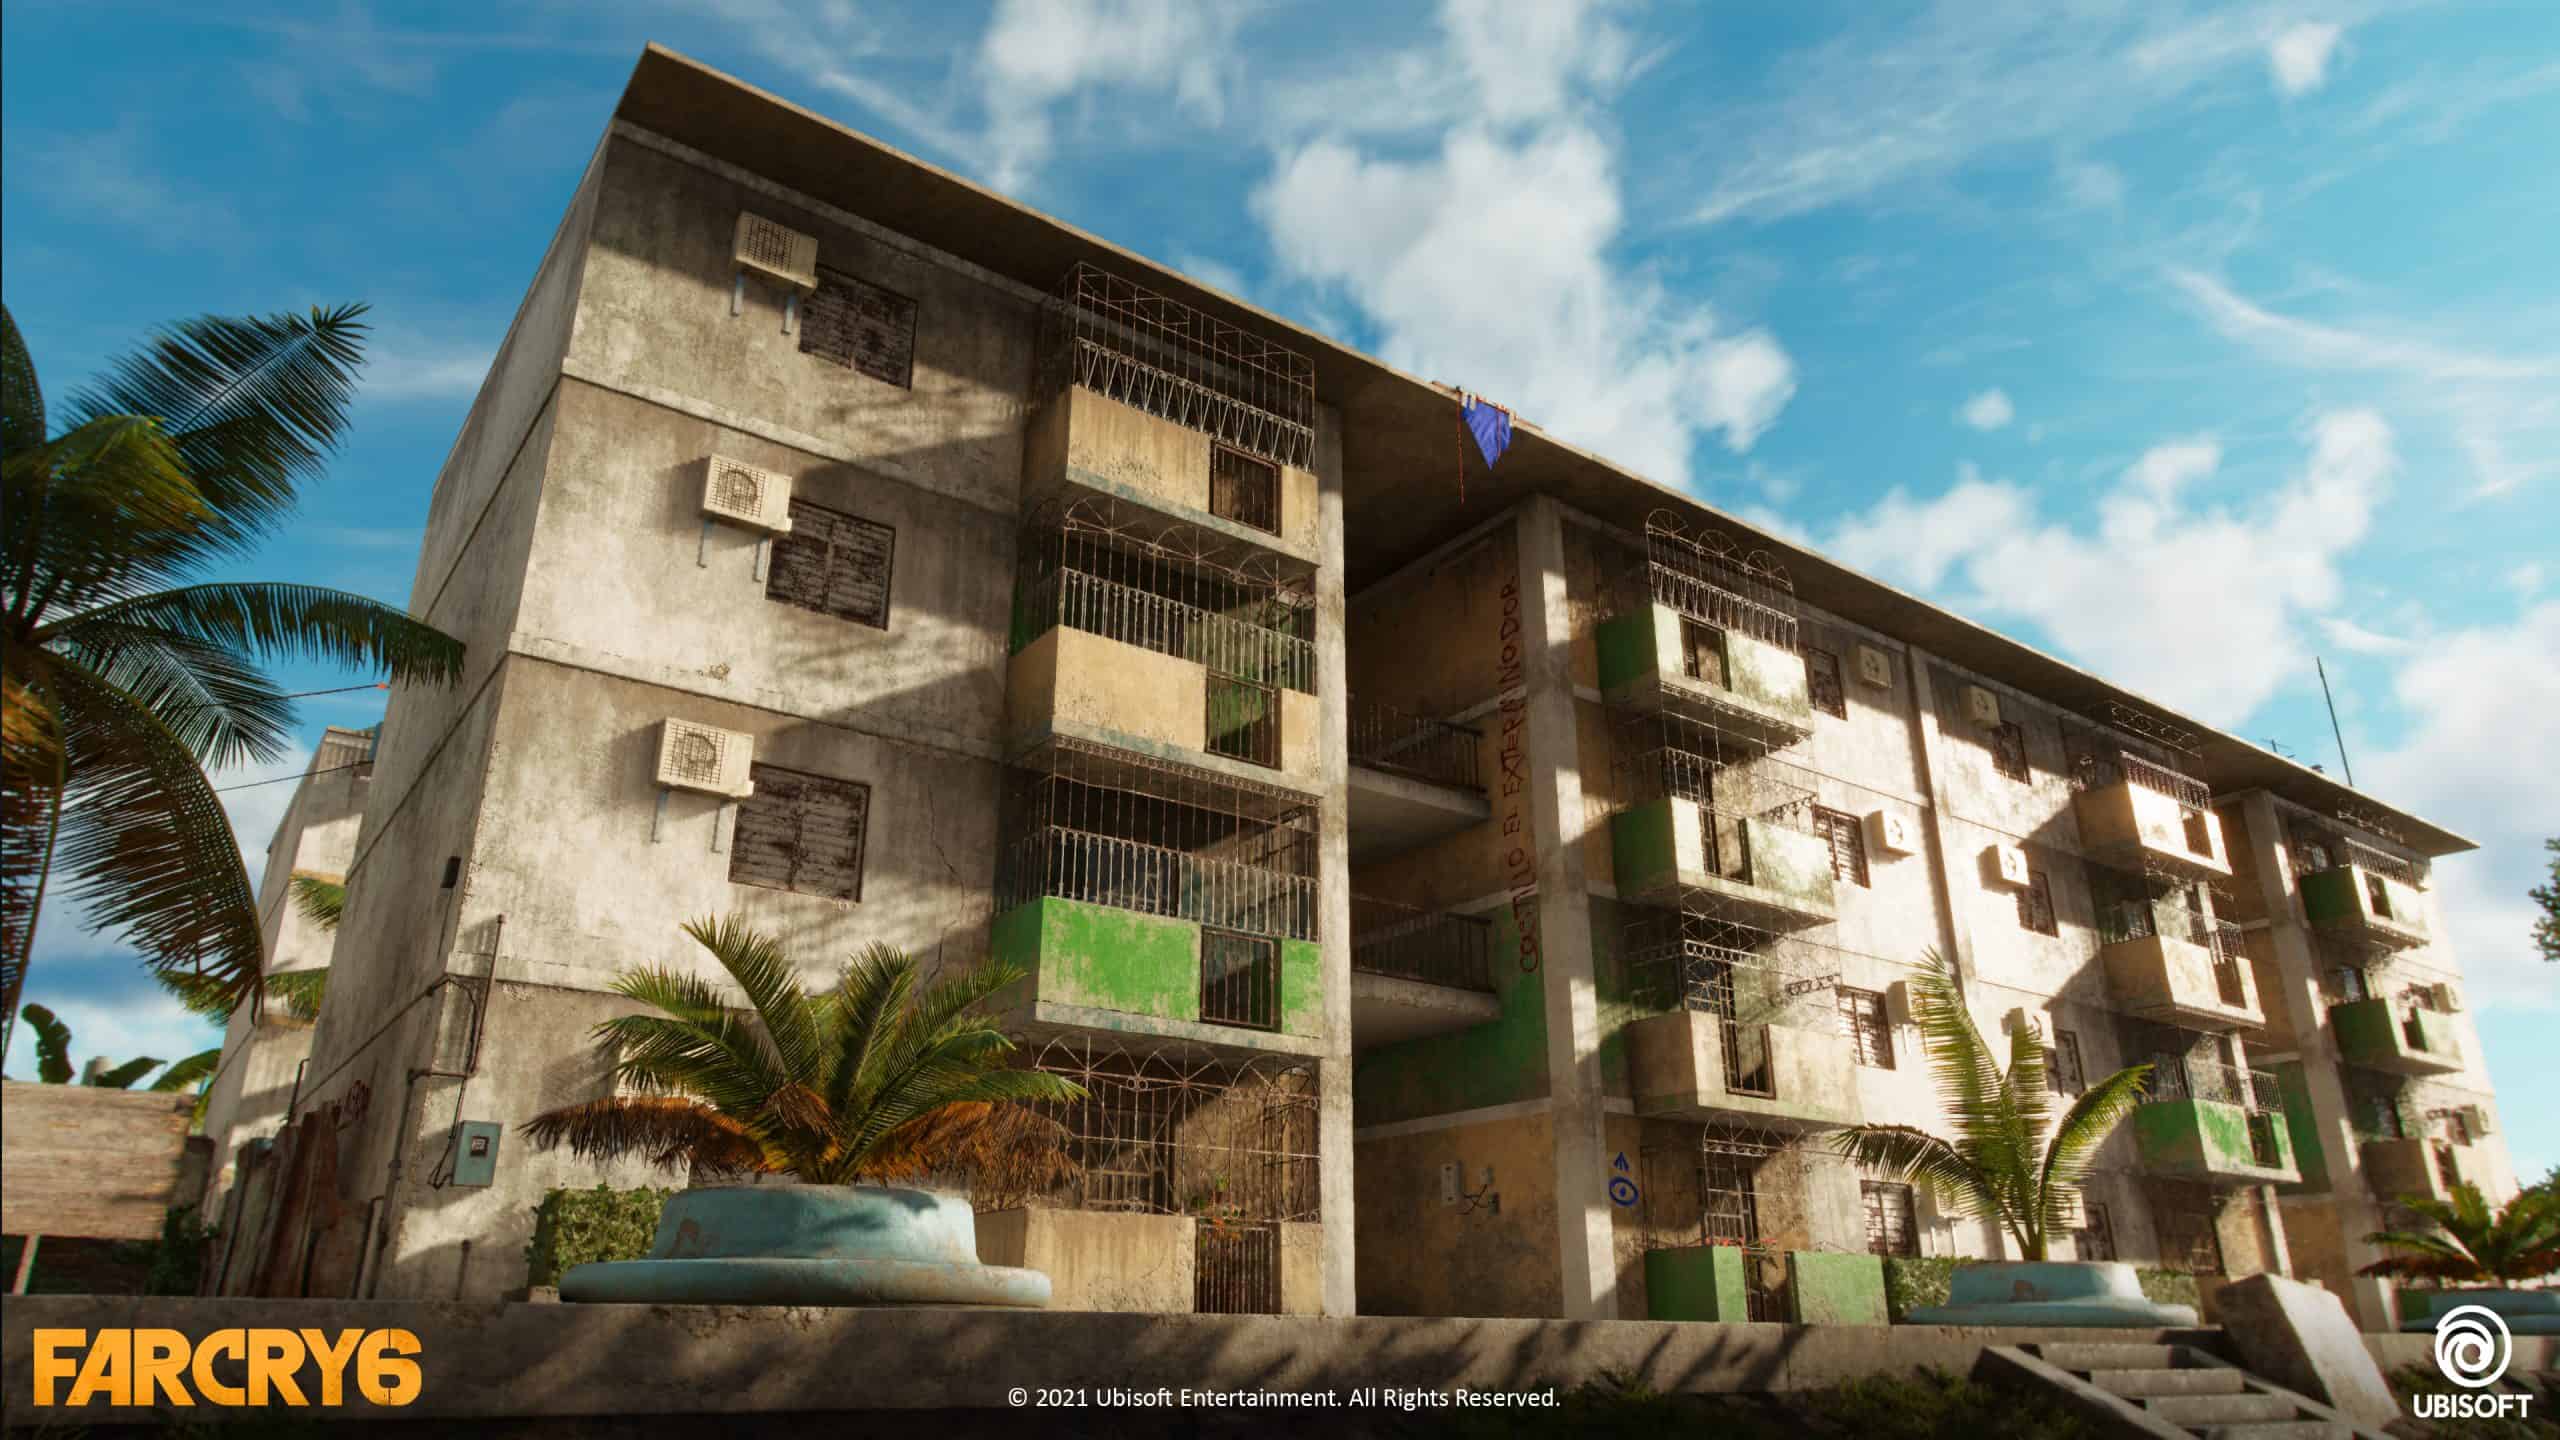 Far Cry 6 art, soviet-style apartment block